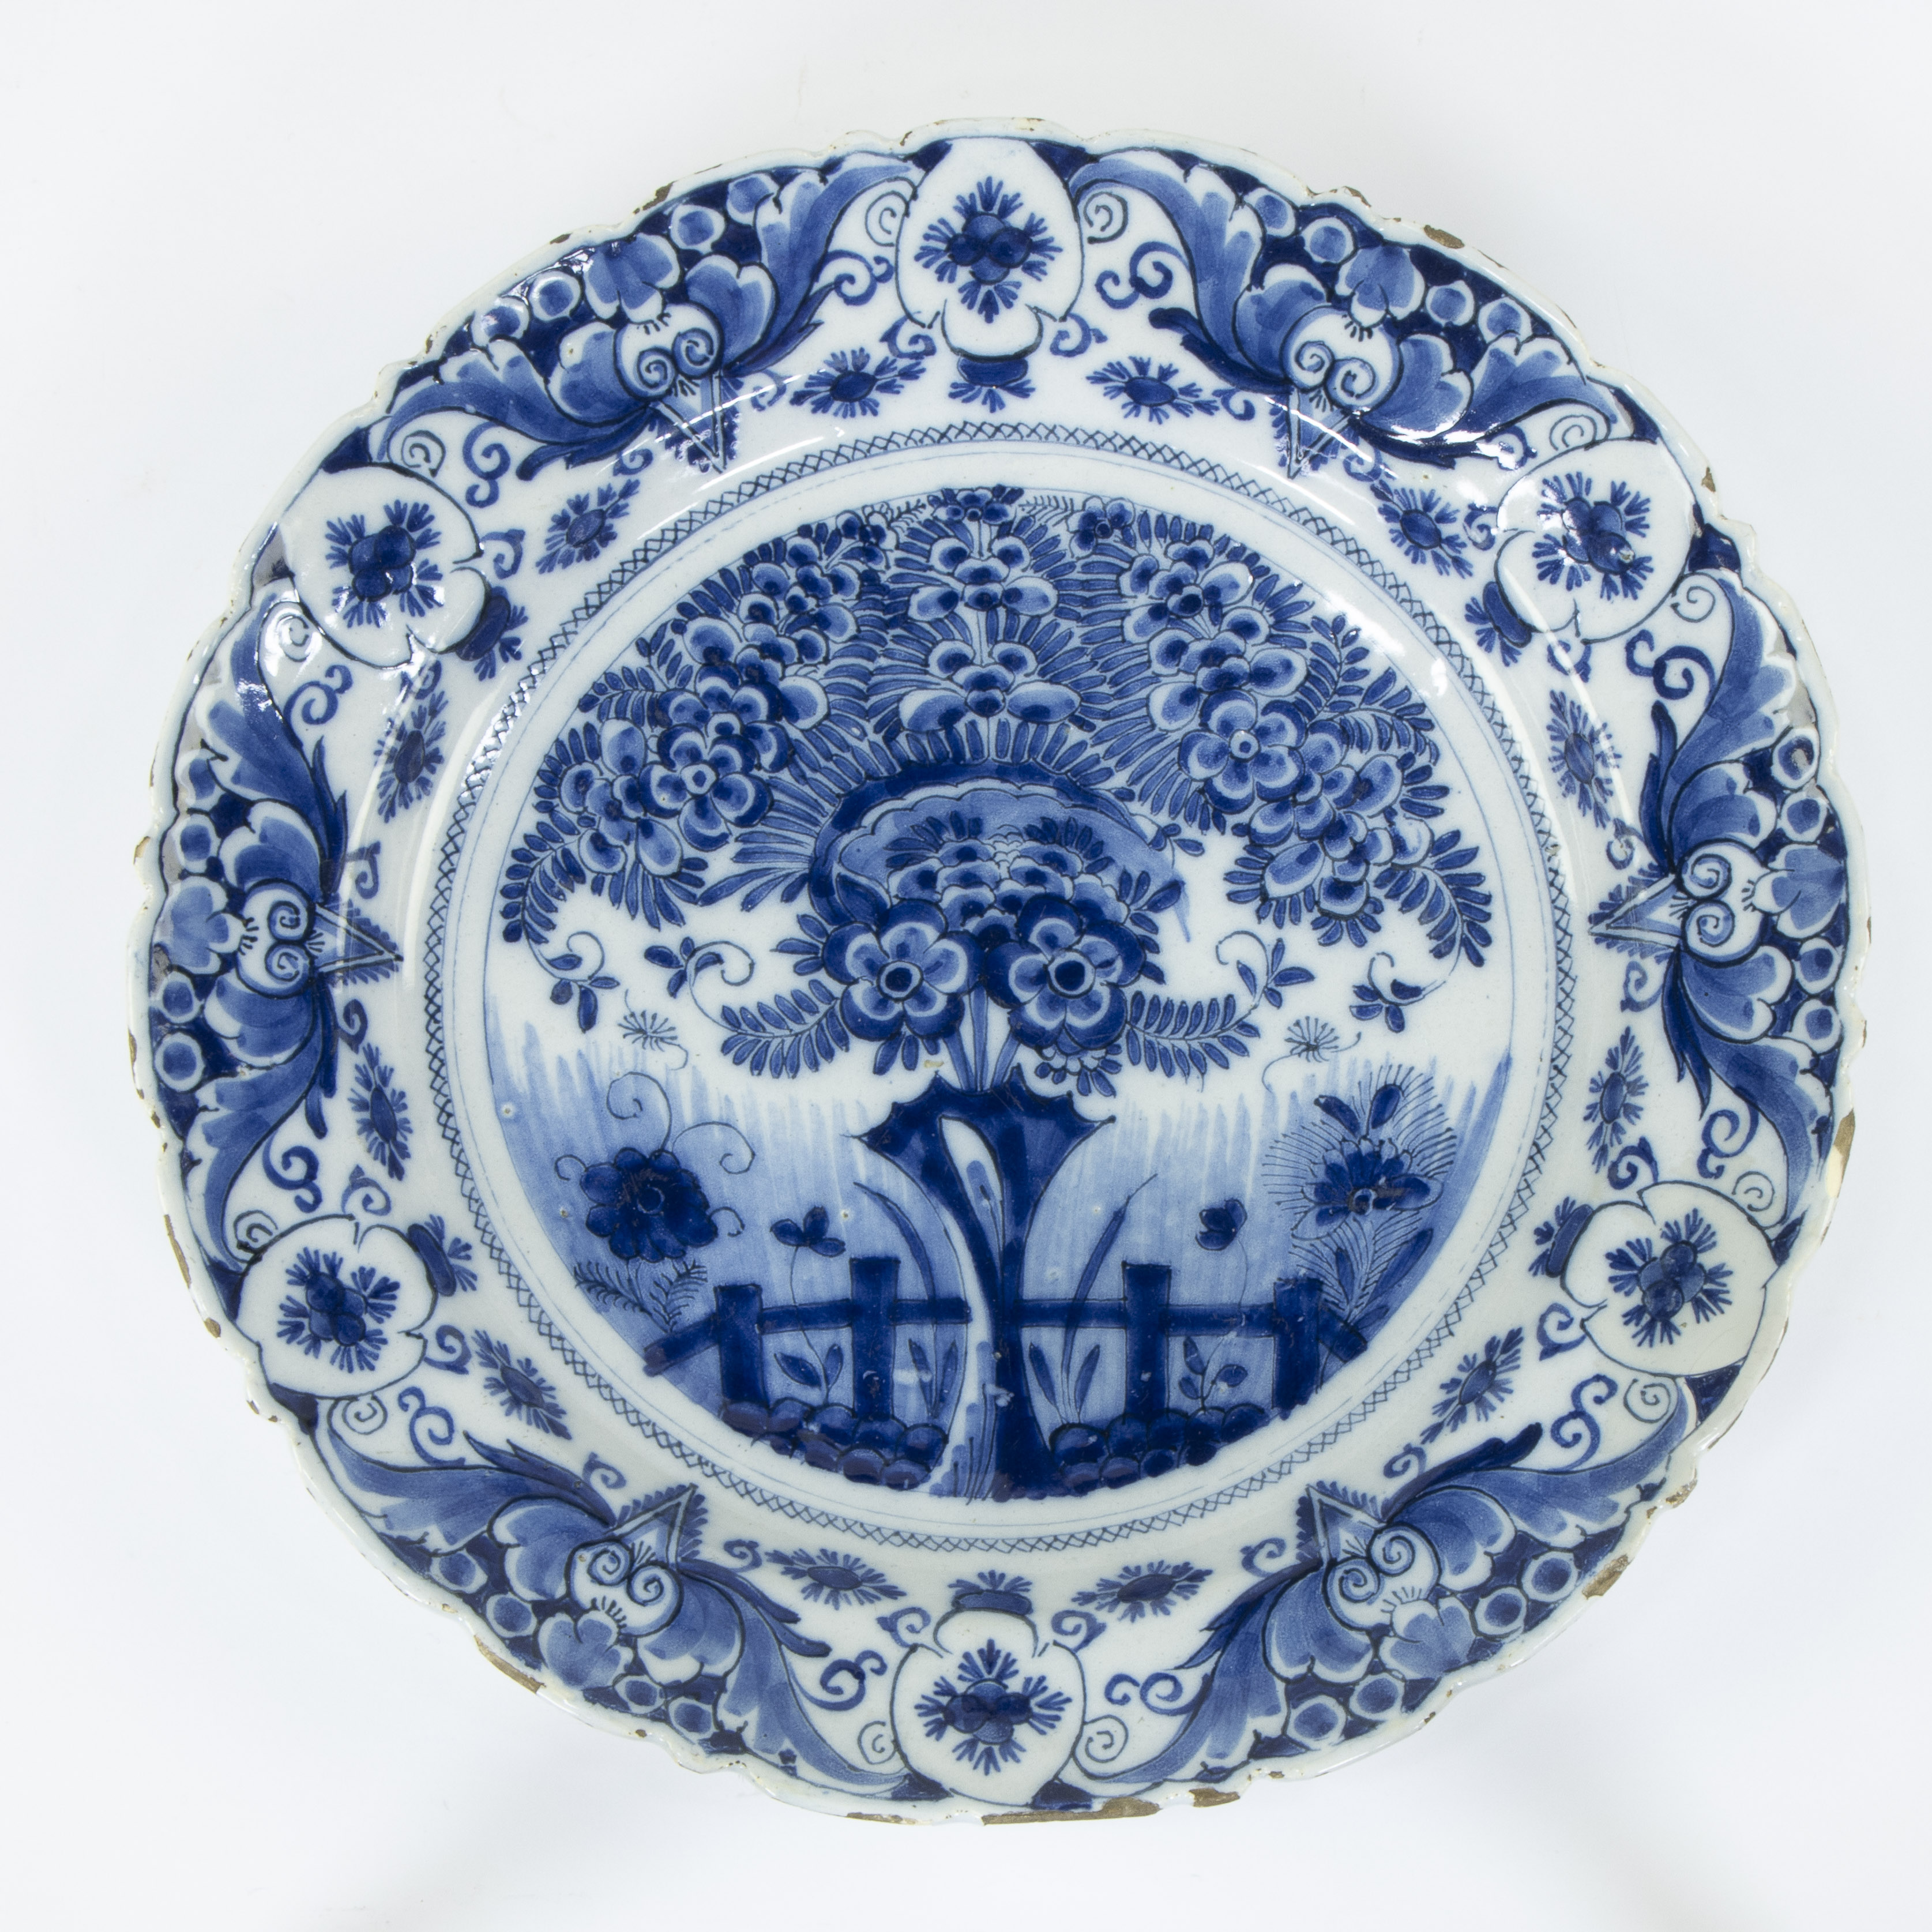 3 Delft 'Tea Tree' plates, De Klauw, 18th century, marked - Image 4 of 7